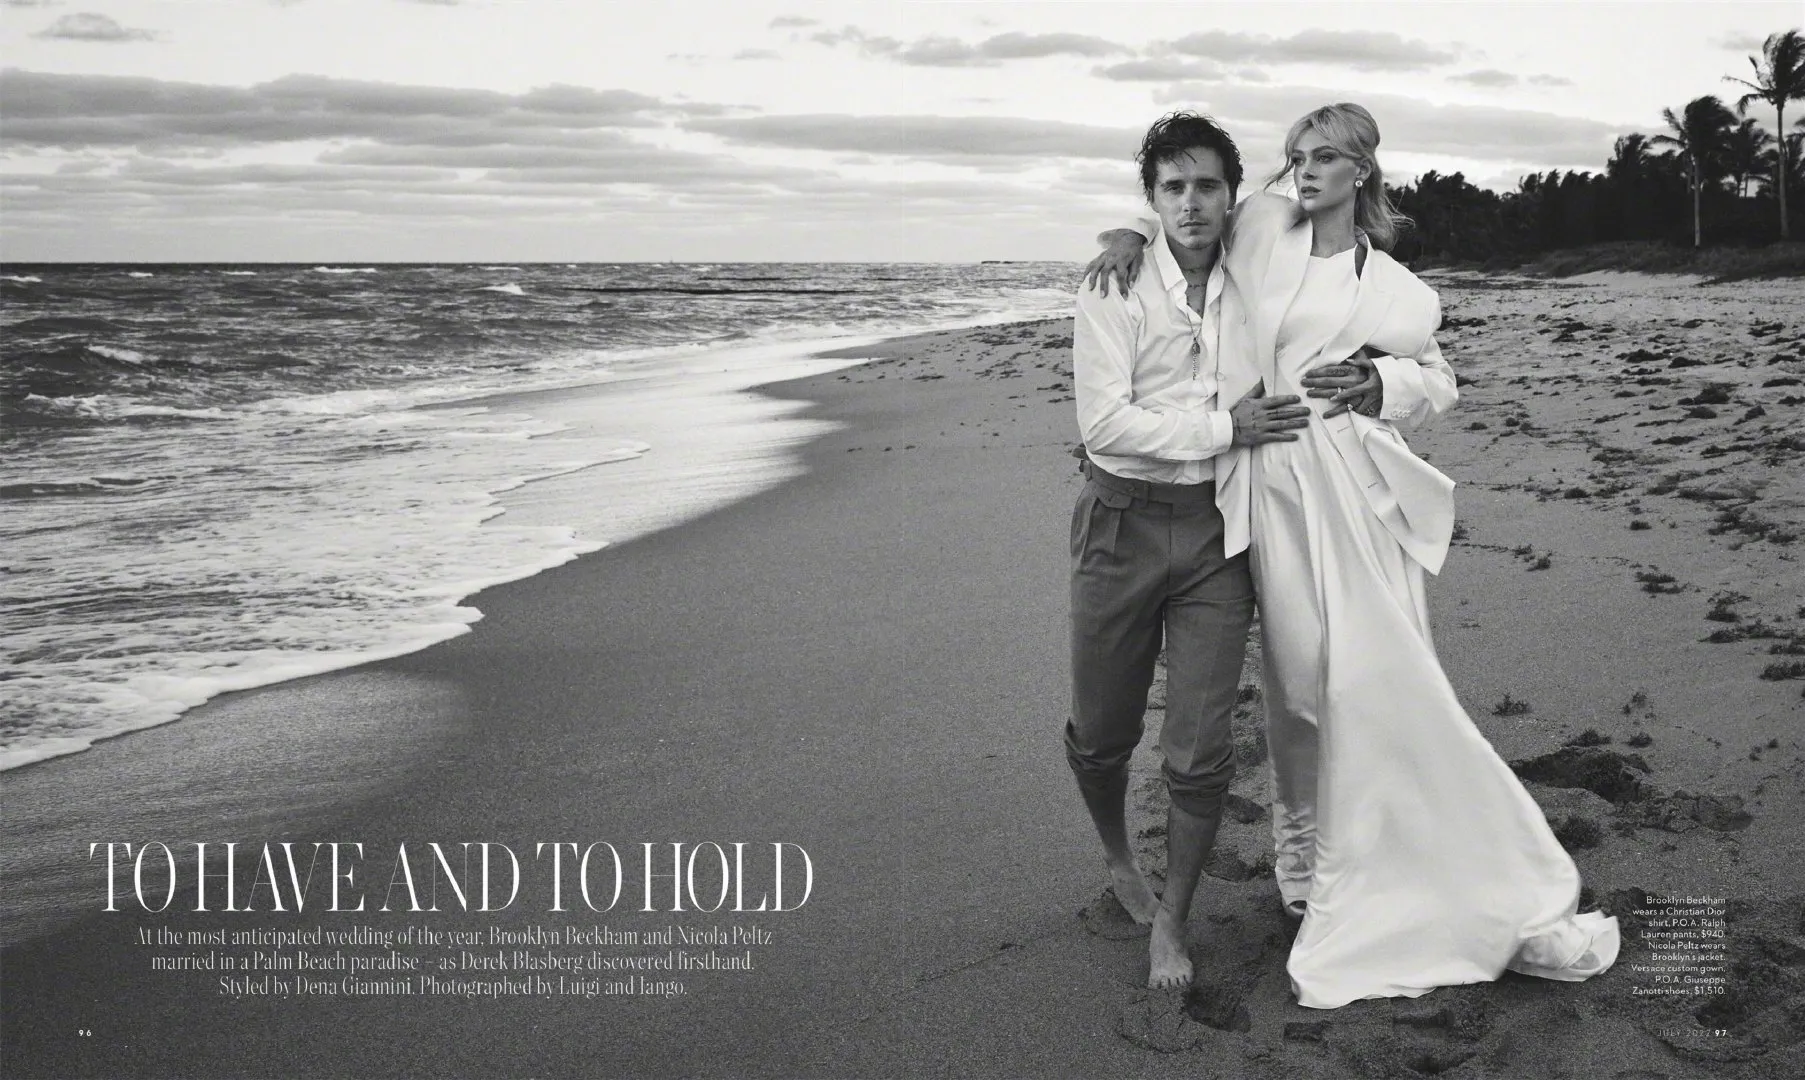 Brooklyn Joseph Beckham and Nicola Peltz, "Vogue" magazine Australia July issue photo | FMV6